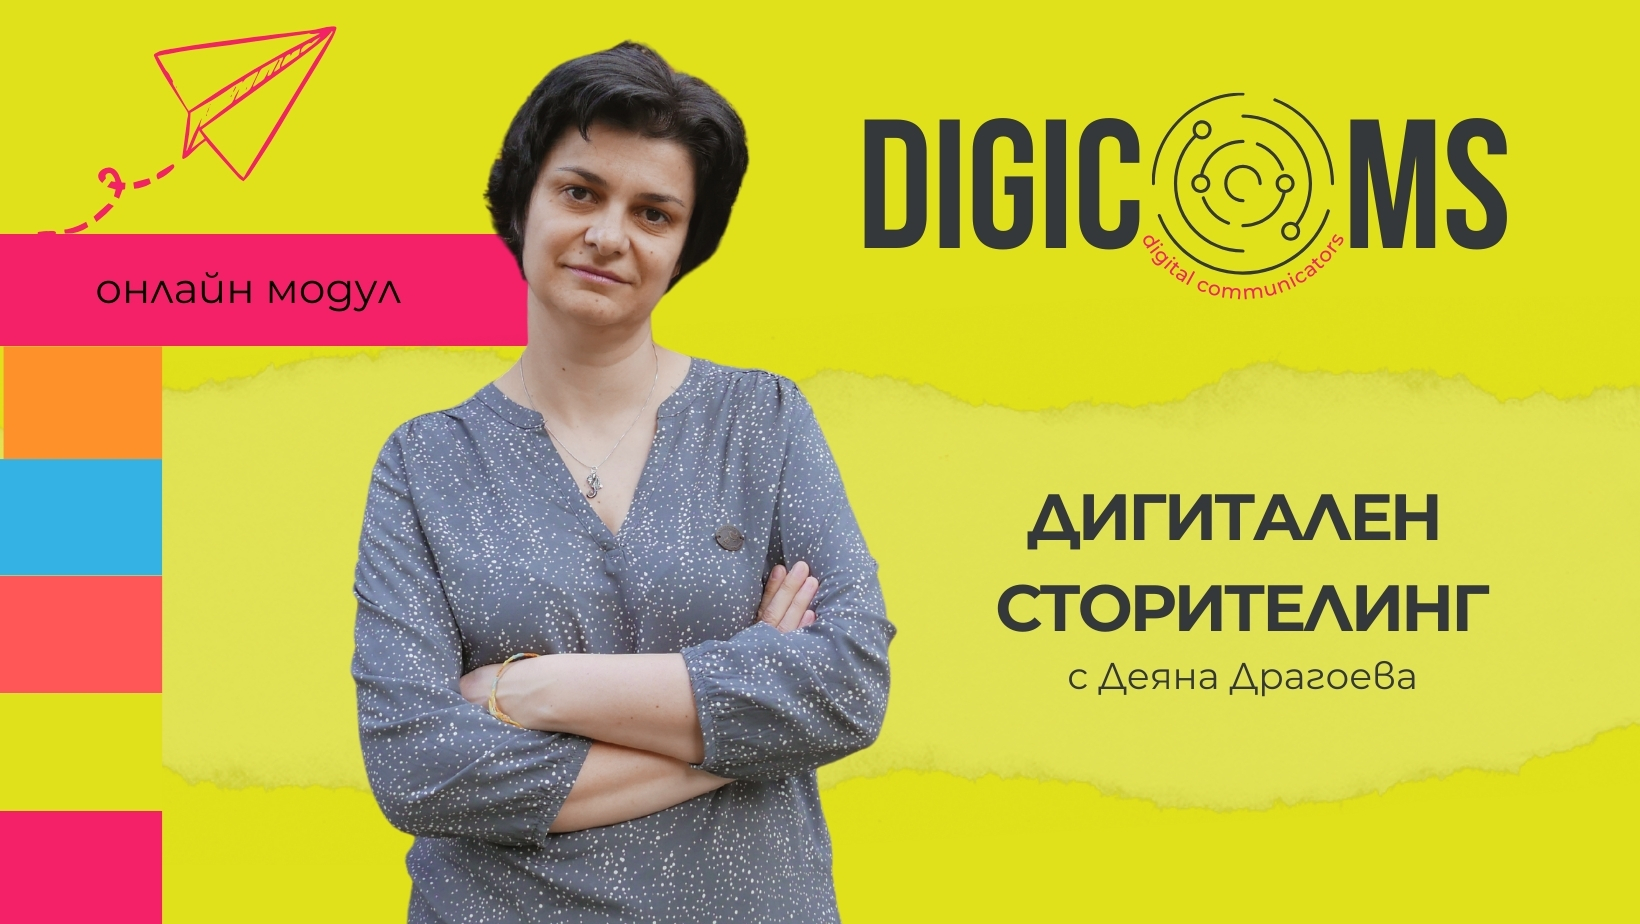 DigiComs модул: Дигитален сторителинг с Деяна Драгоева